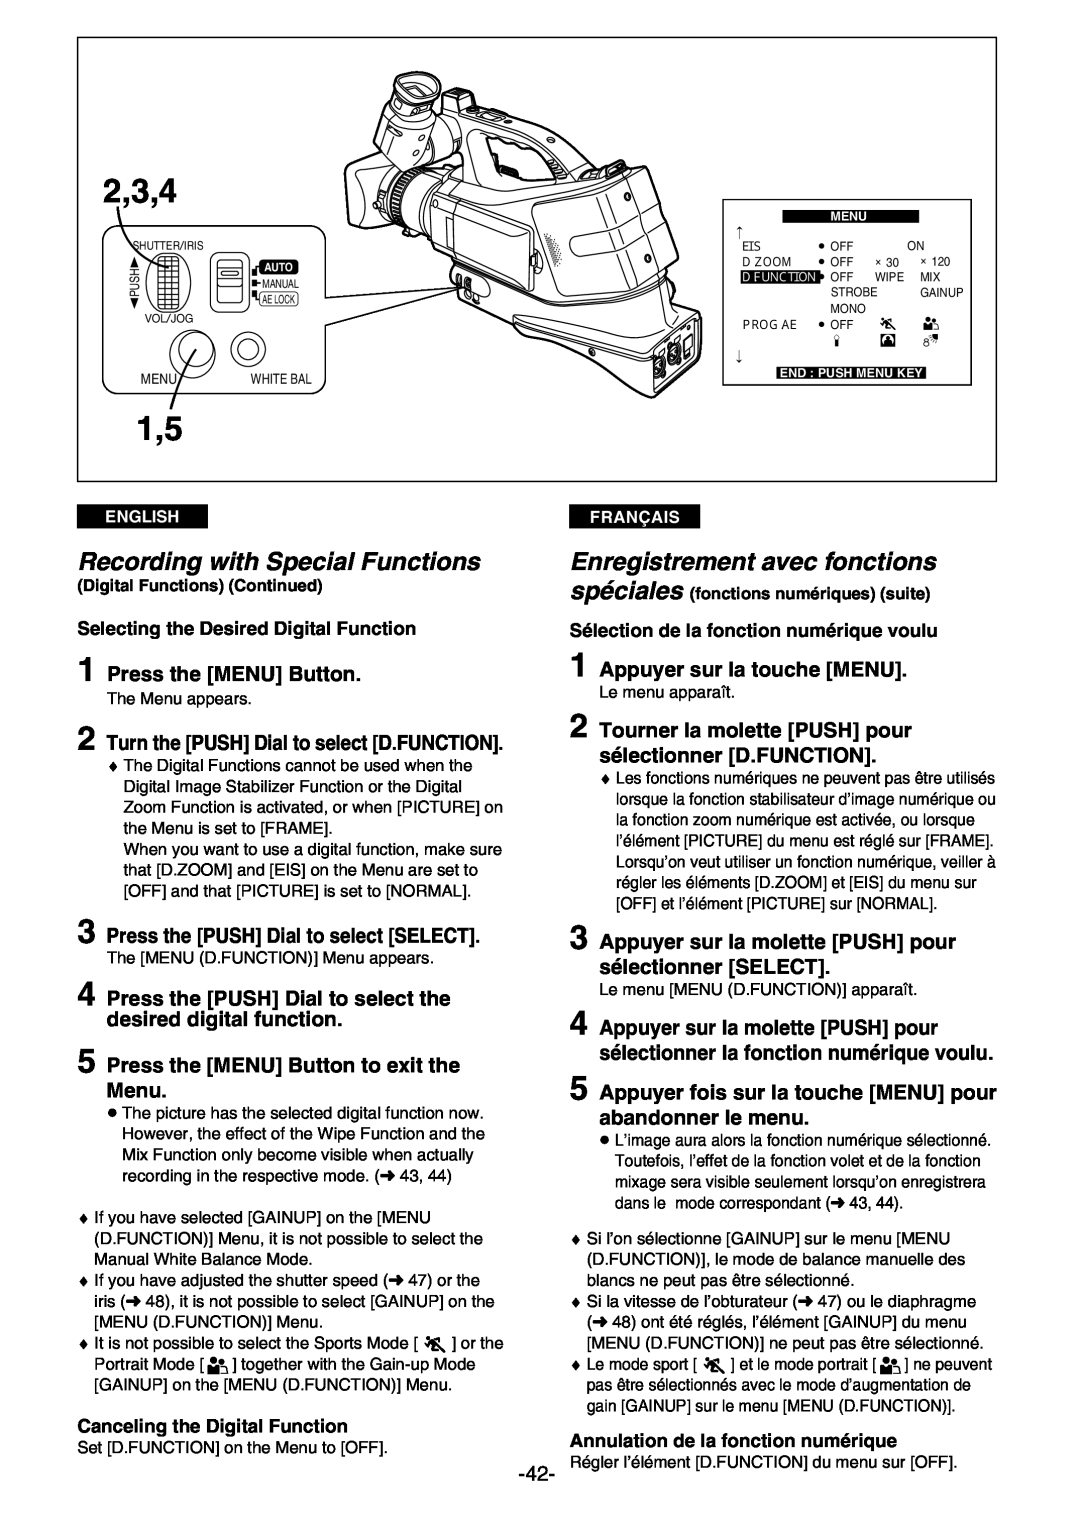 Panasonic AG- DVC 15P 2,3,4, Press the MENU Button, Turn the PUSH Dial to select D.FUNCTION, Enregistrement avec fonctions 